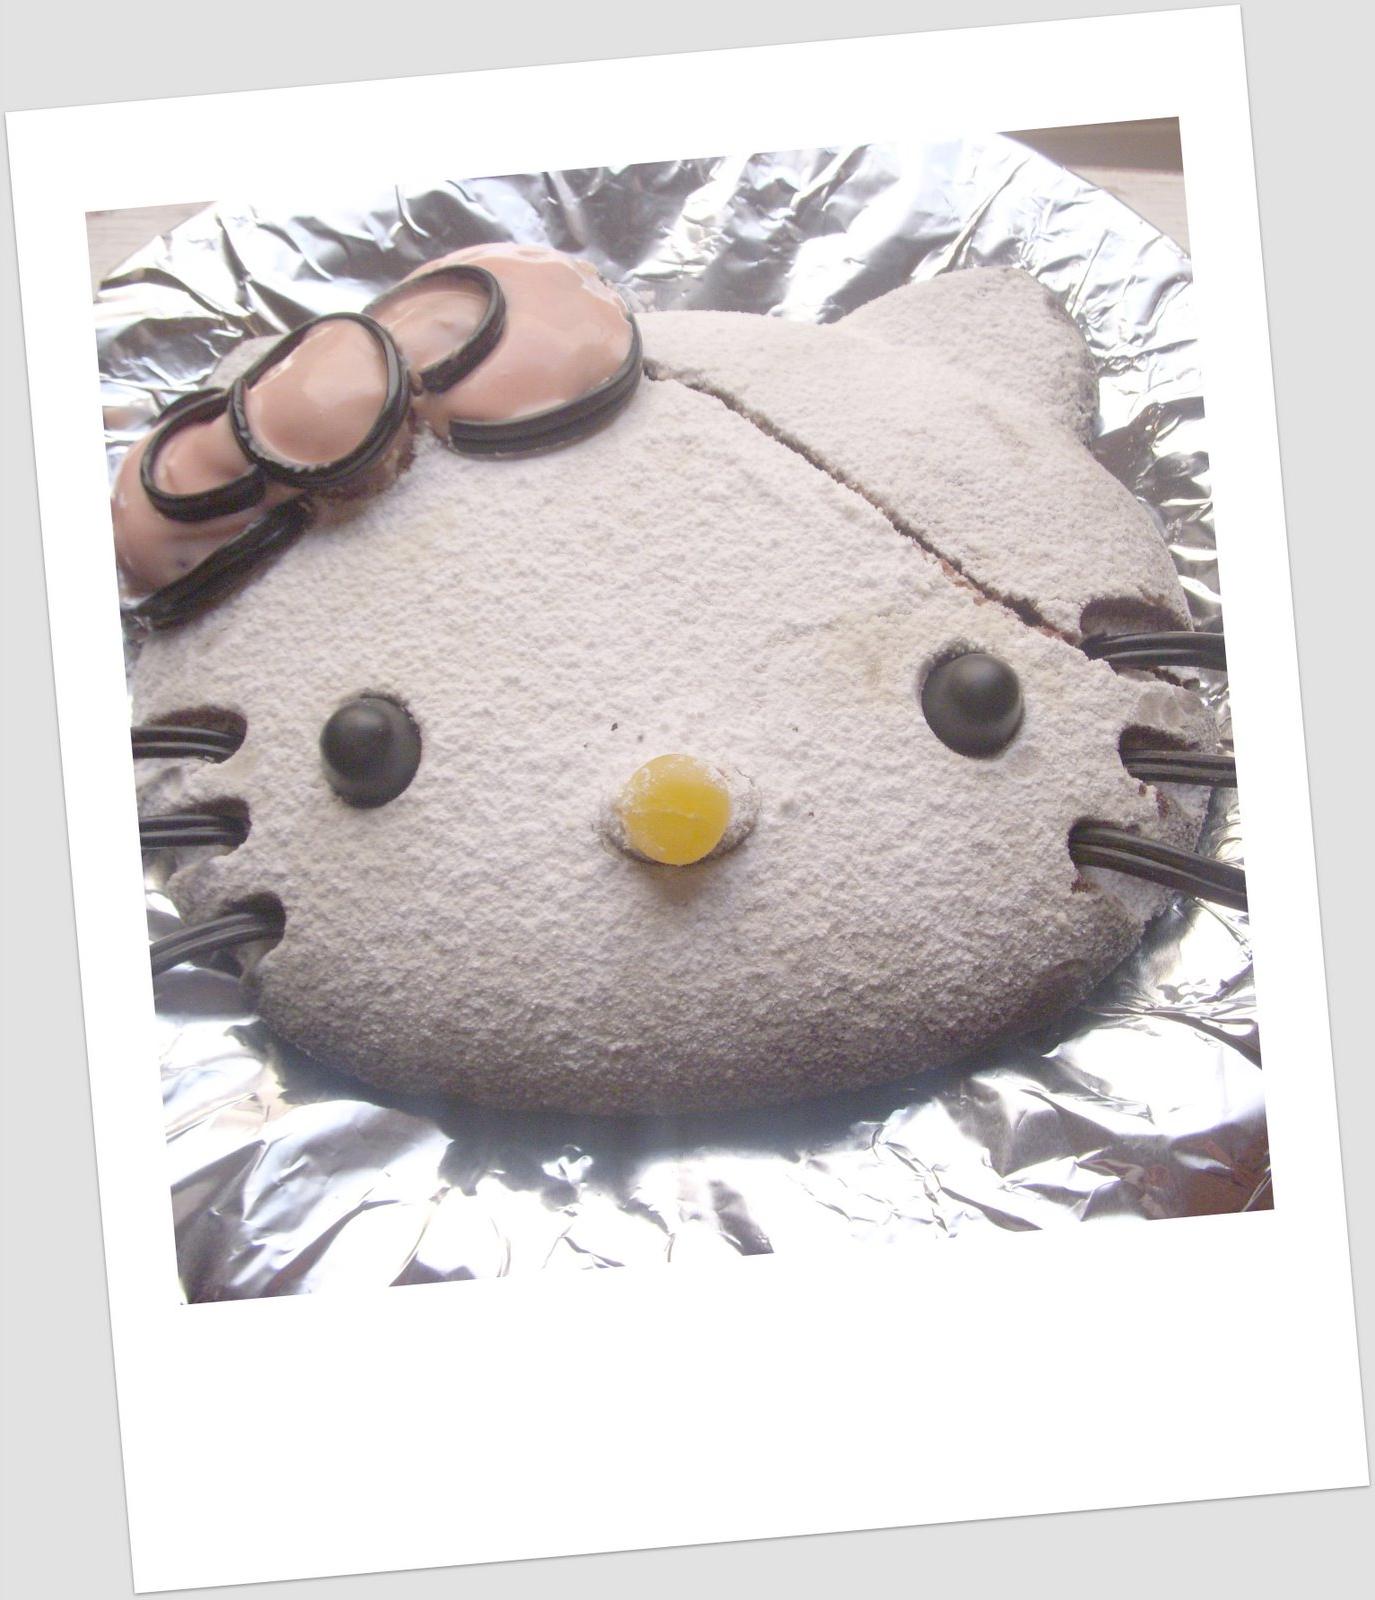 Perfected Hello Kitty cake.